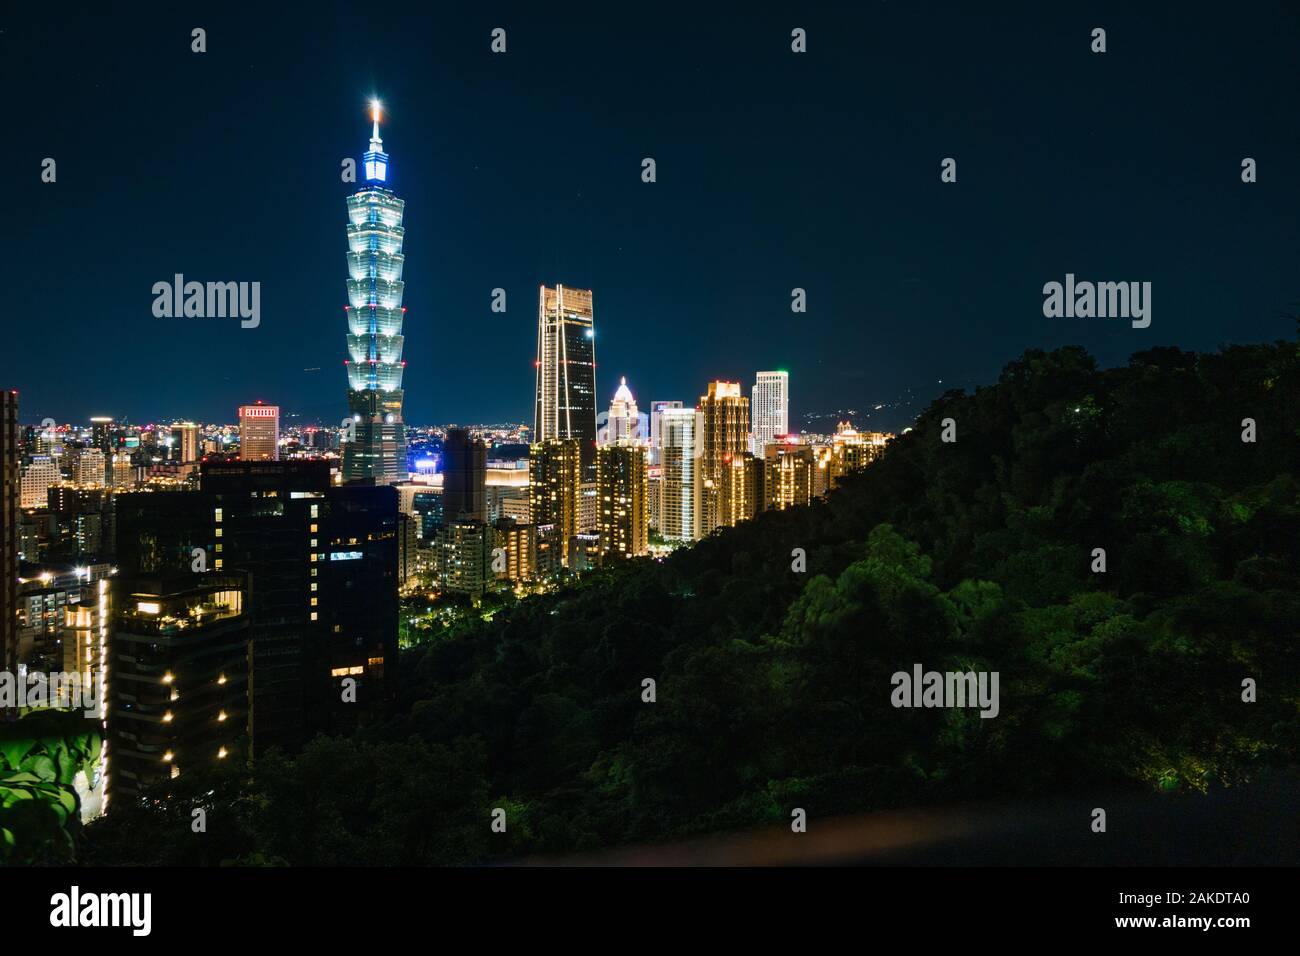 The Taipei 101 skyscraper and city skyline illuminated at night, as seen from Elephant Hill, Taipei, Taiwan Stock Photo